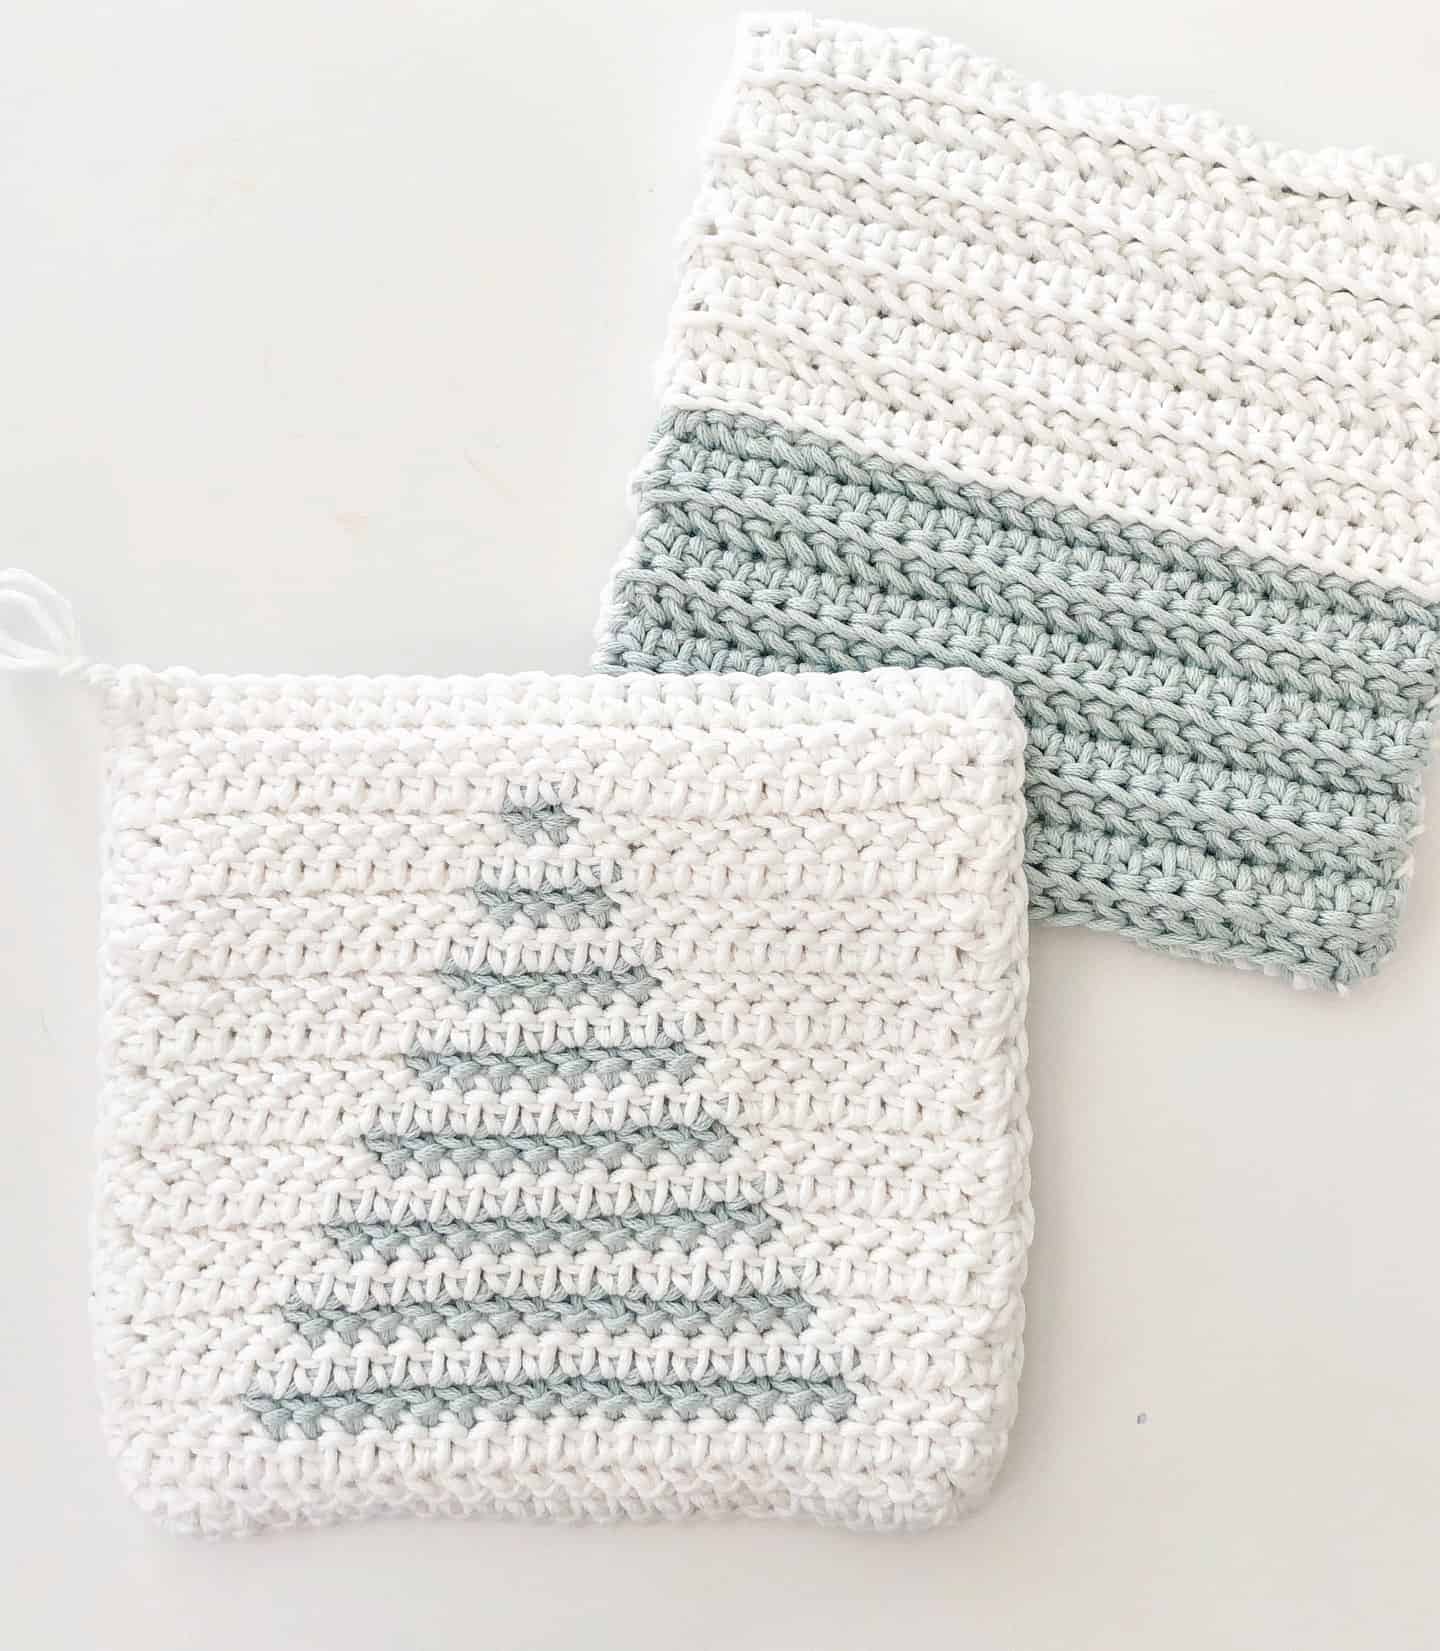 Winter Potholders Free Crochet Patterns - Your Crochet